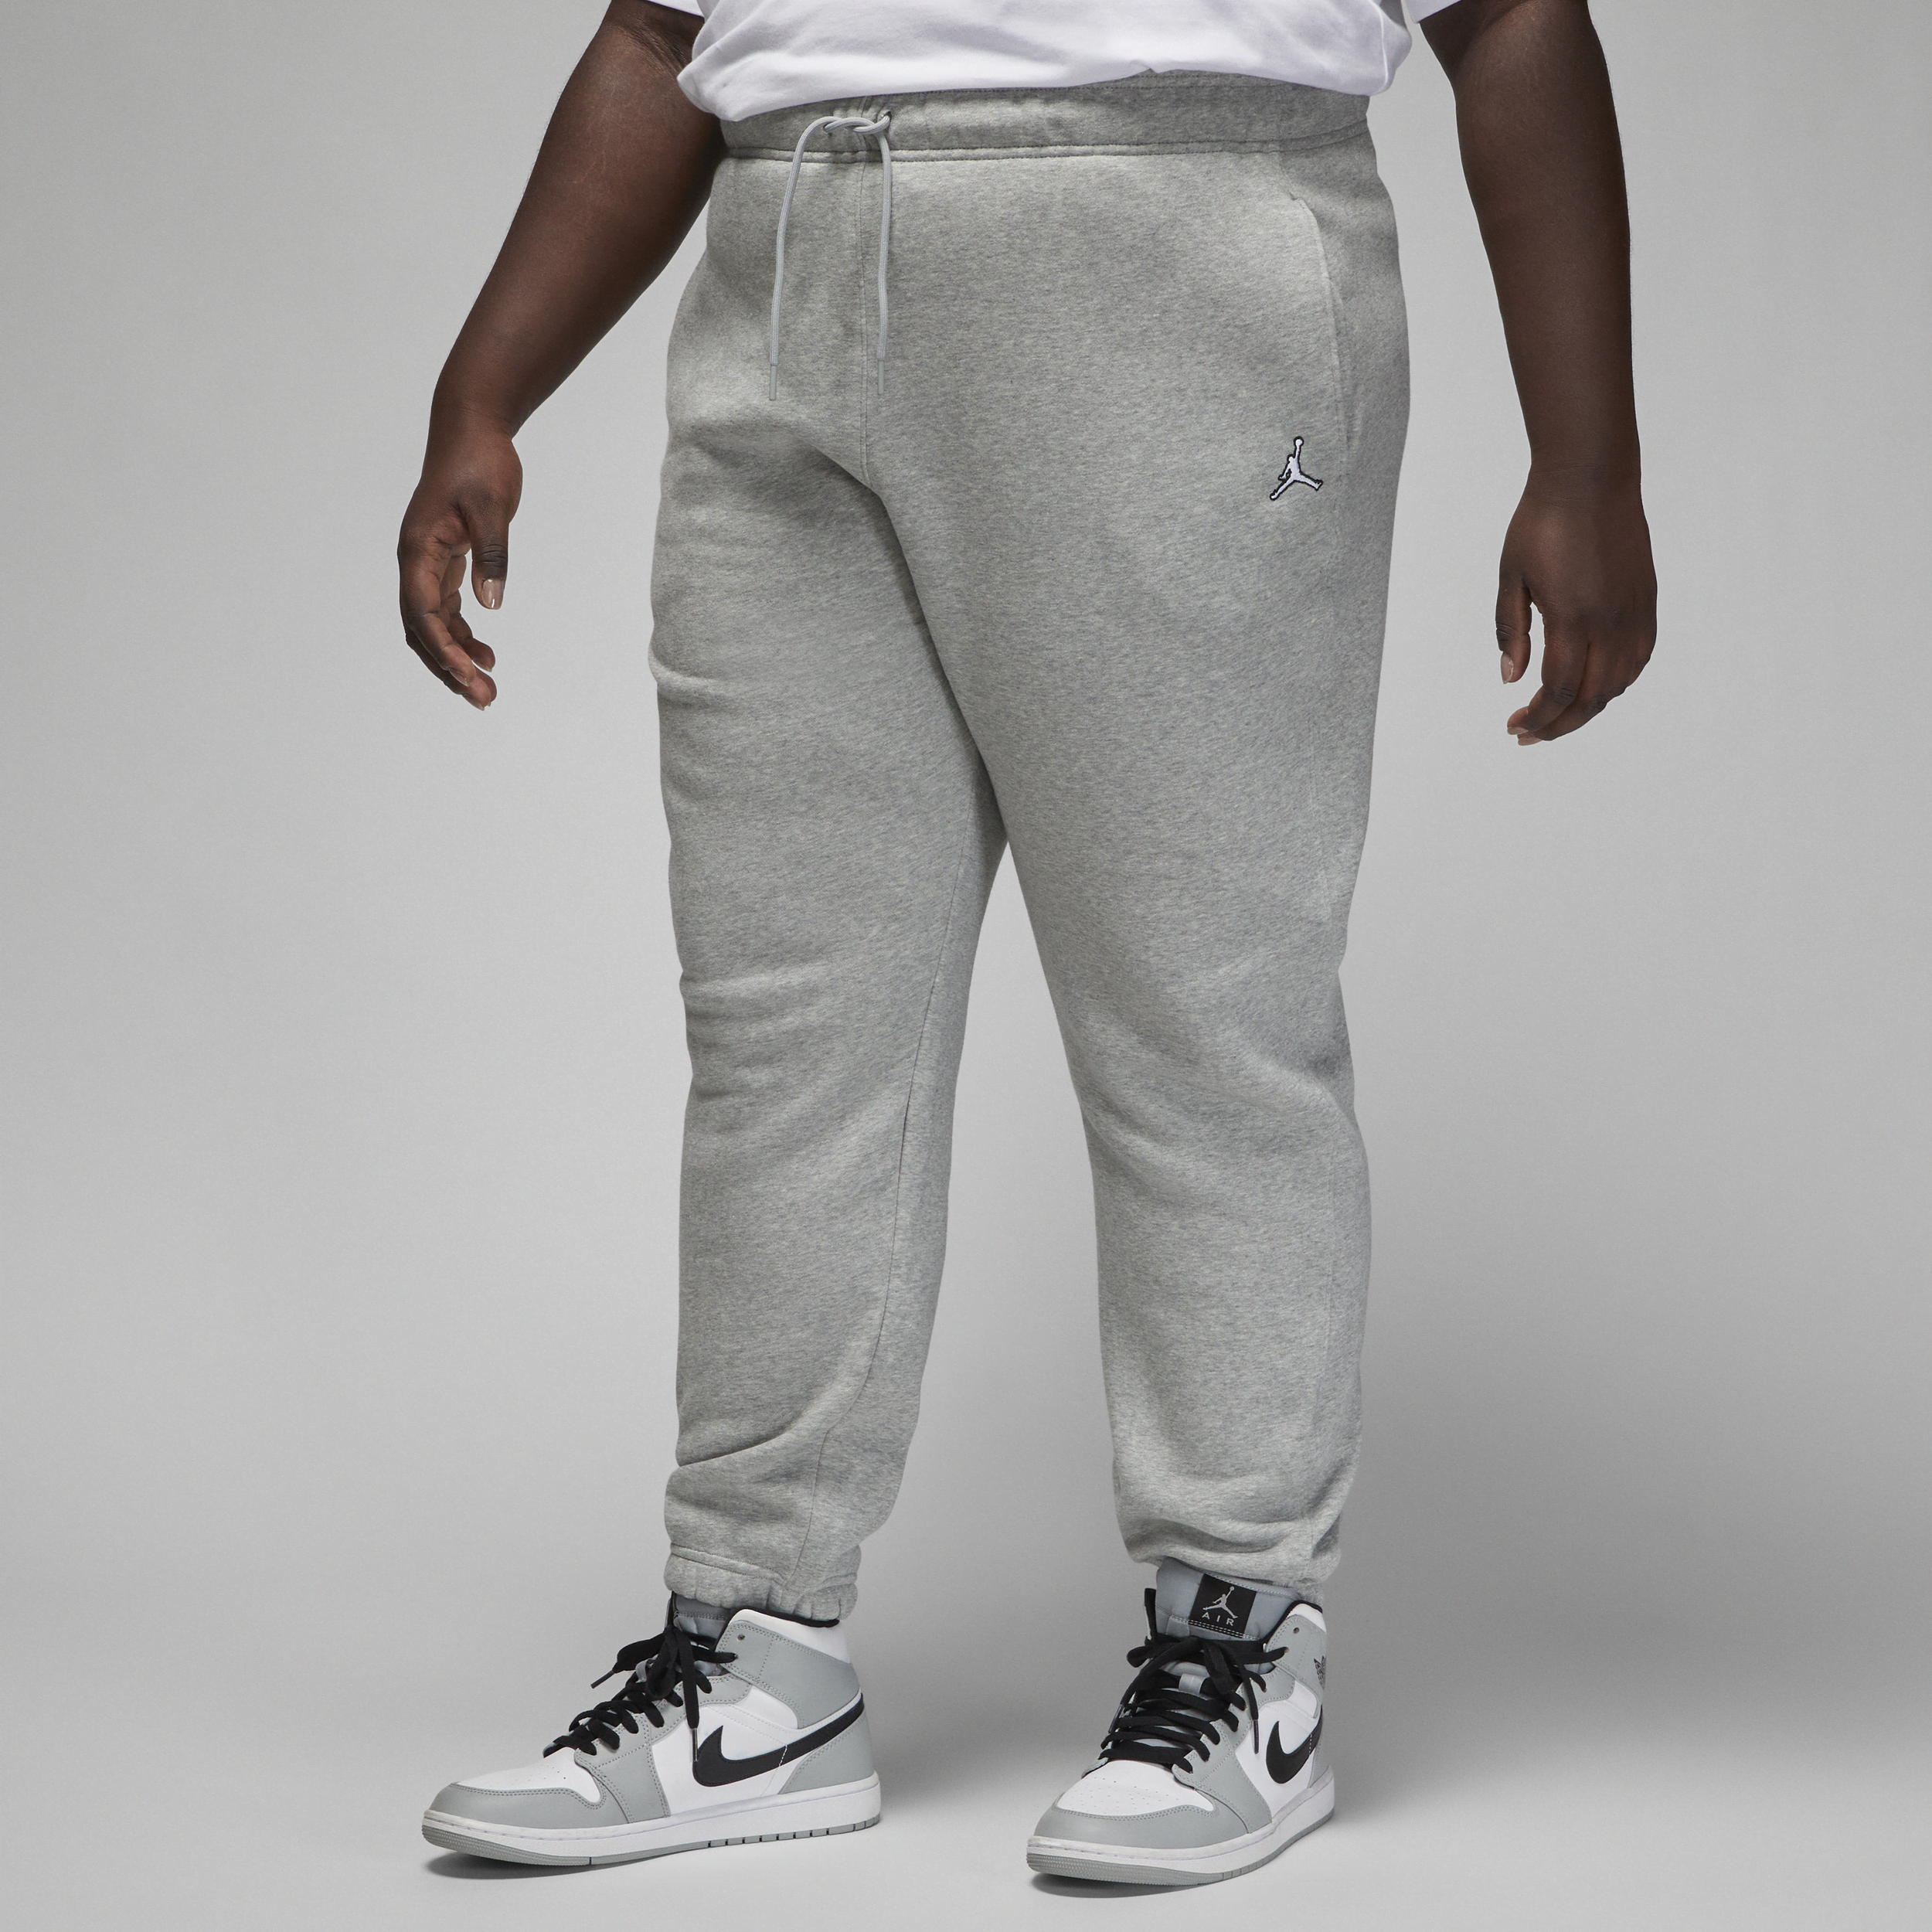 Jordan Brooklyn-fleecebukser til kvinder (plus size) - grå